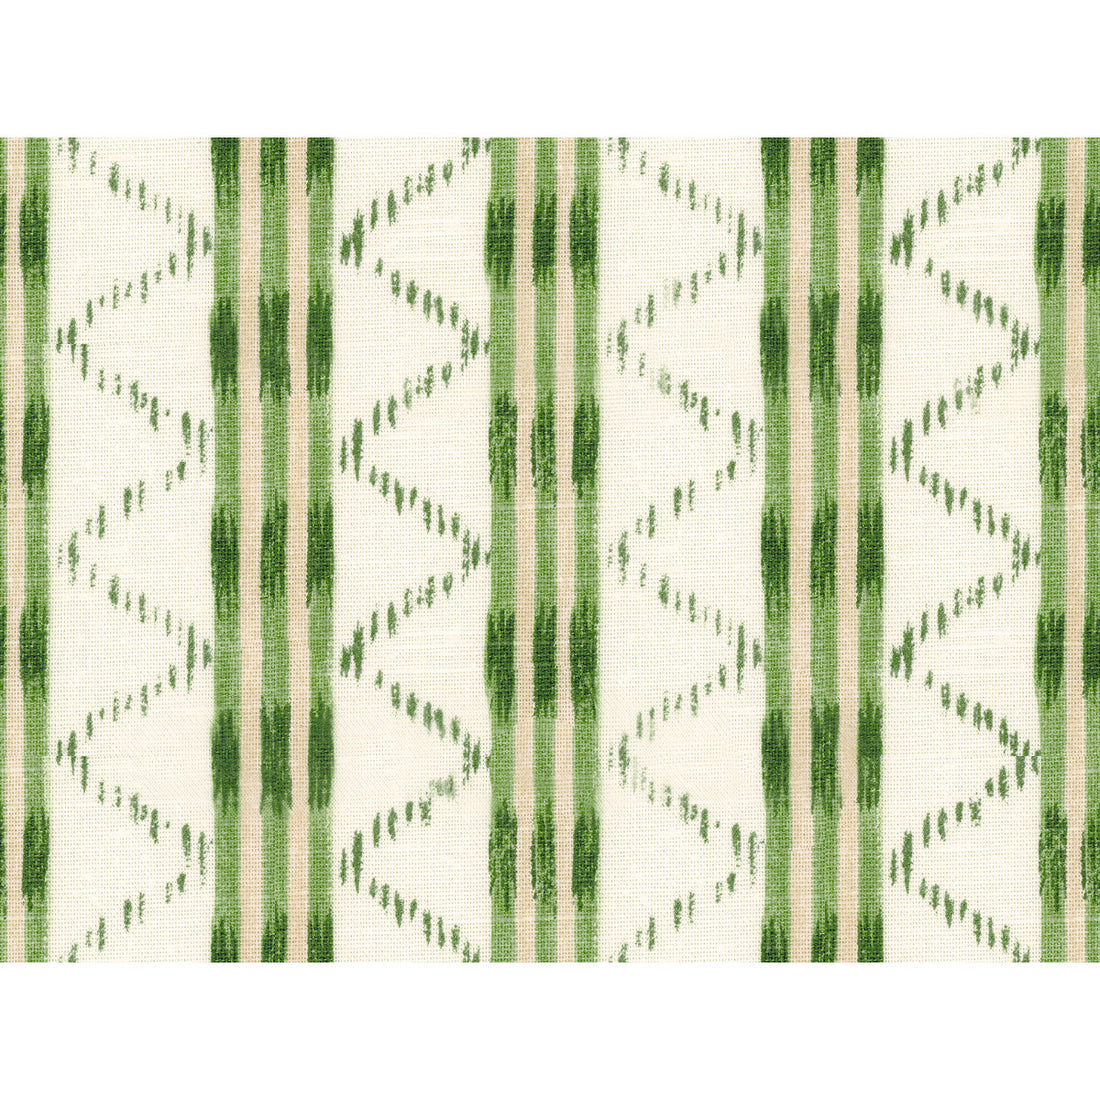 Makassar fabric in green color - pattern 2017106.30.0 - by Lee Jofa in the Oscar De La Renta III collection